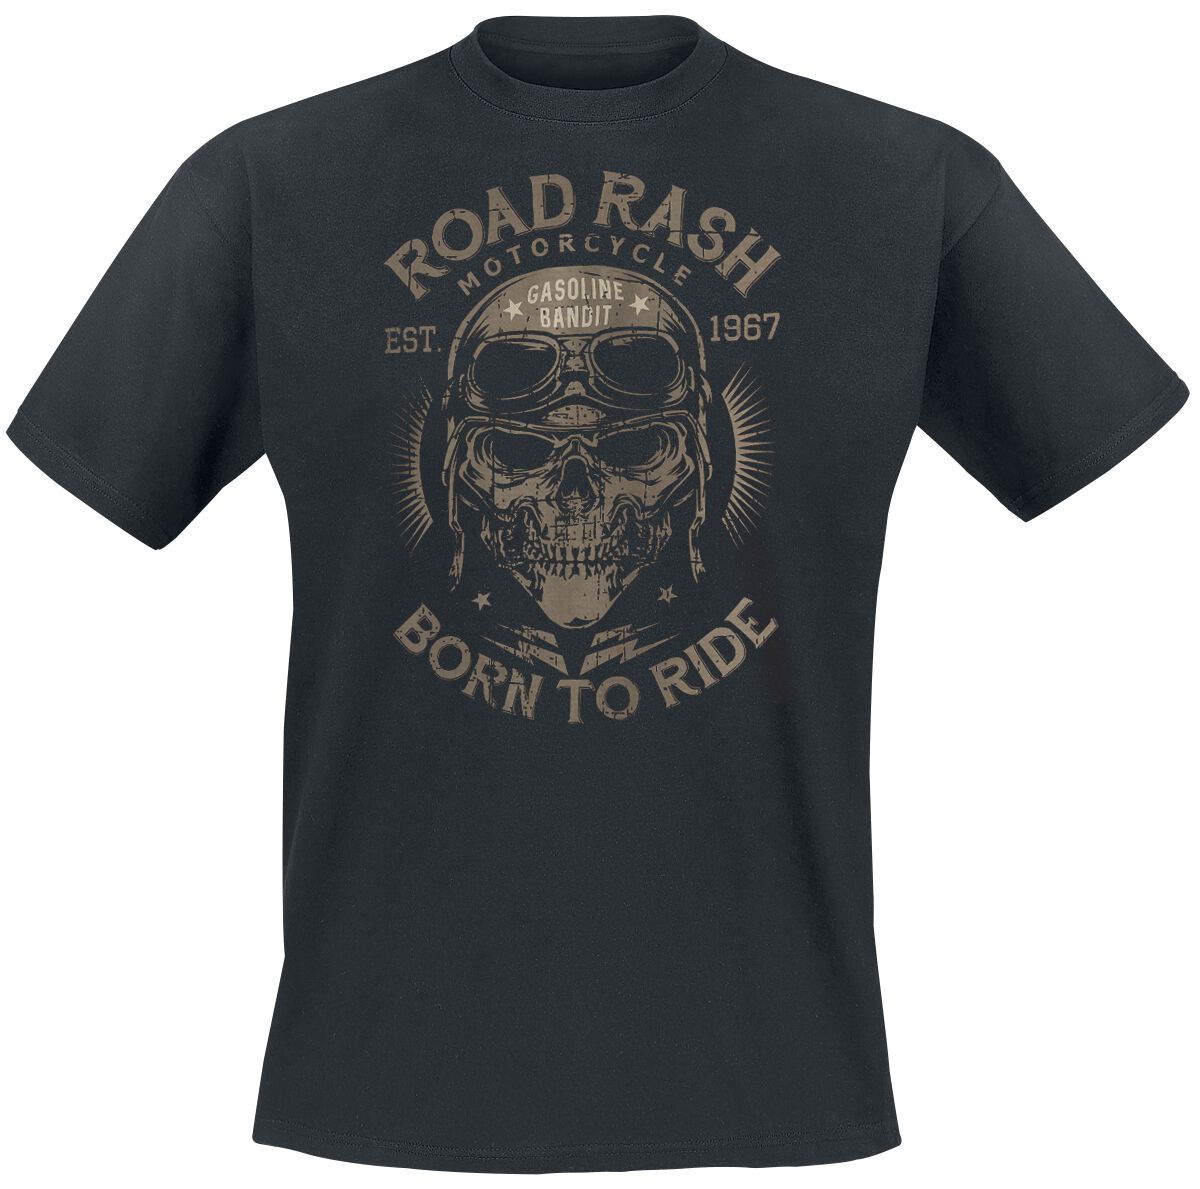 Gasoline Bandit Road Rash T-Shirt schwarz in S